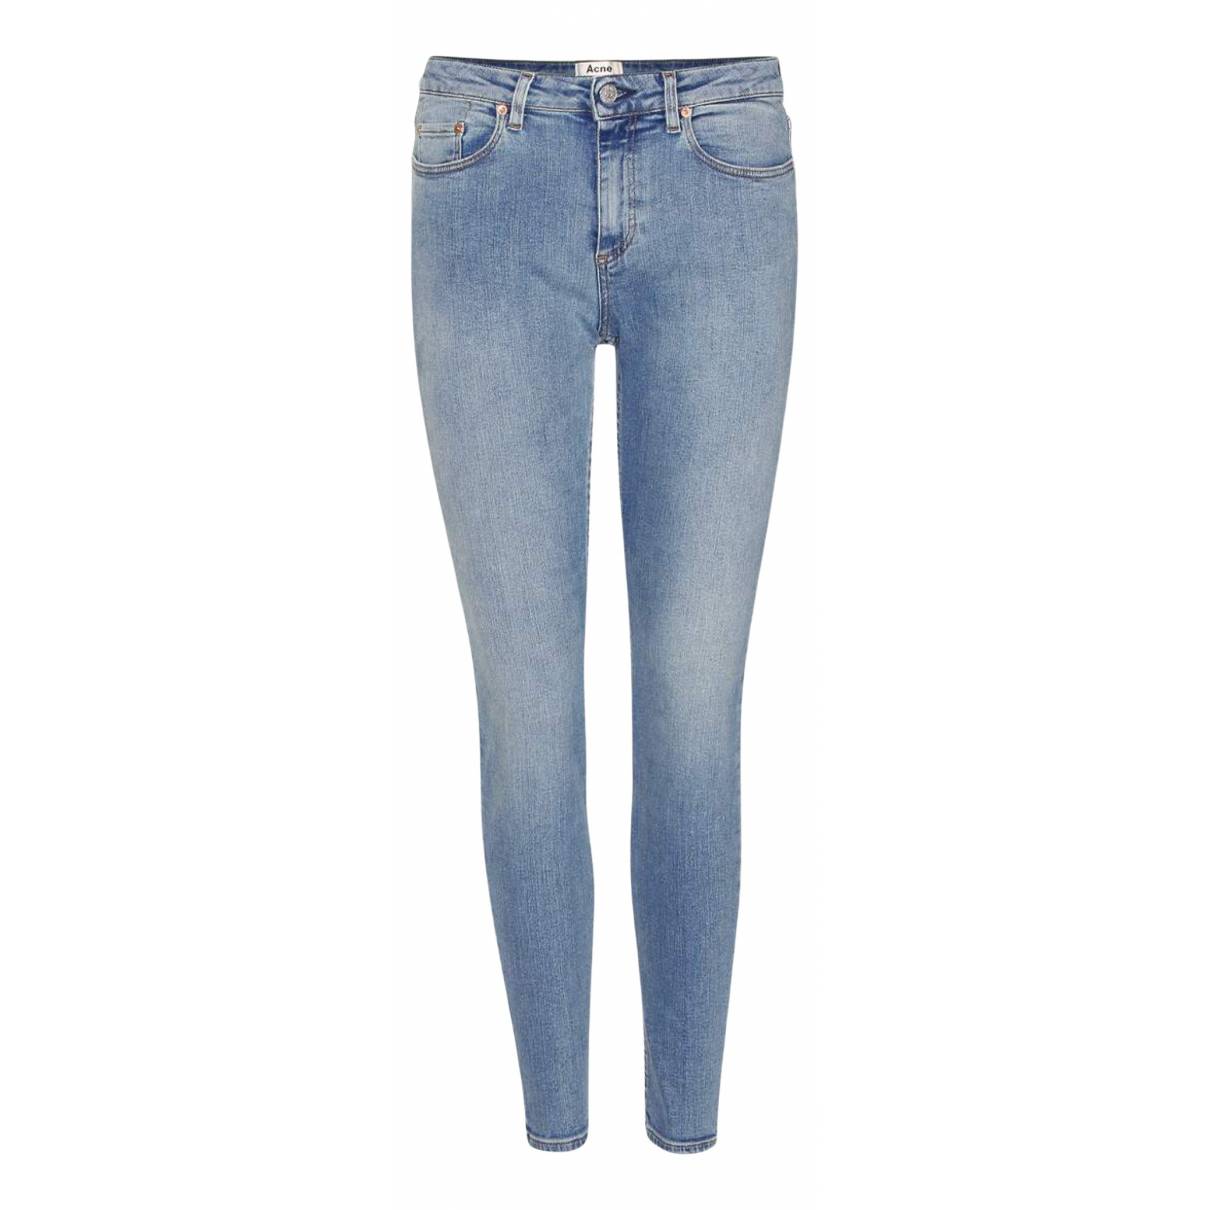 Skin 5 slim jeans Acne Studios Blue size 28 US in Cotton - elasthane -  21064921